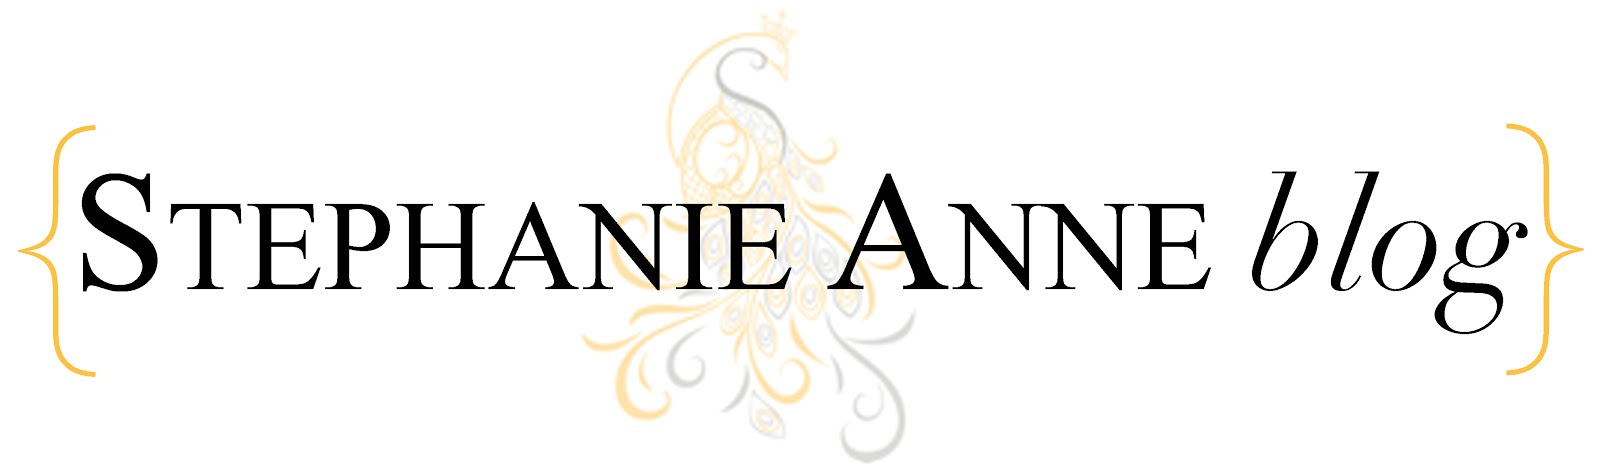 Stephanie Anne Blog